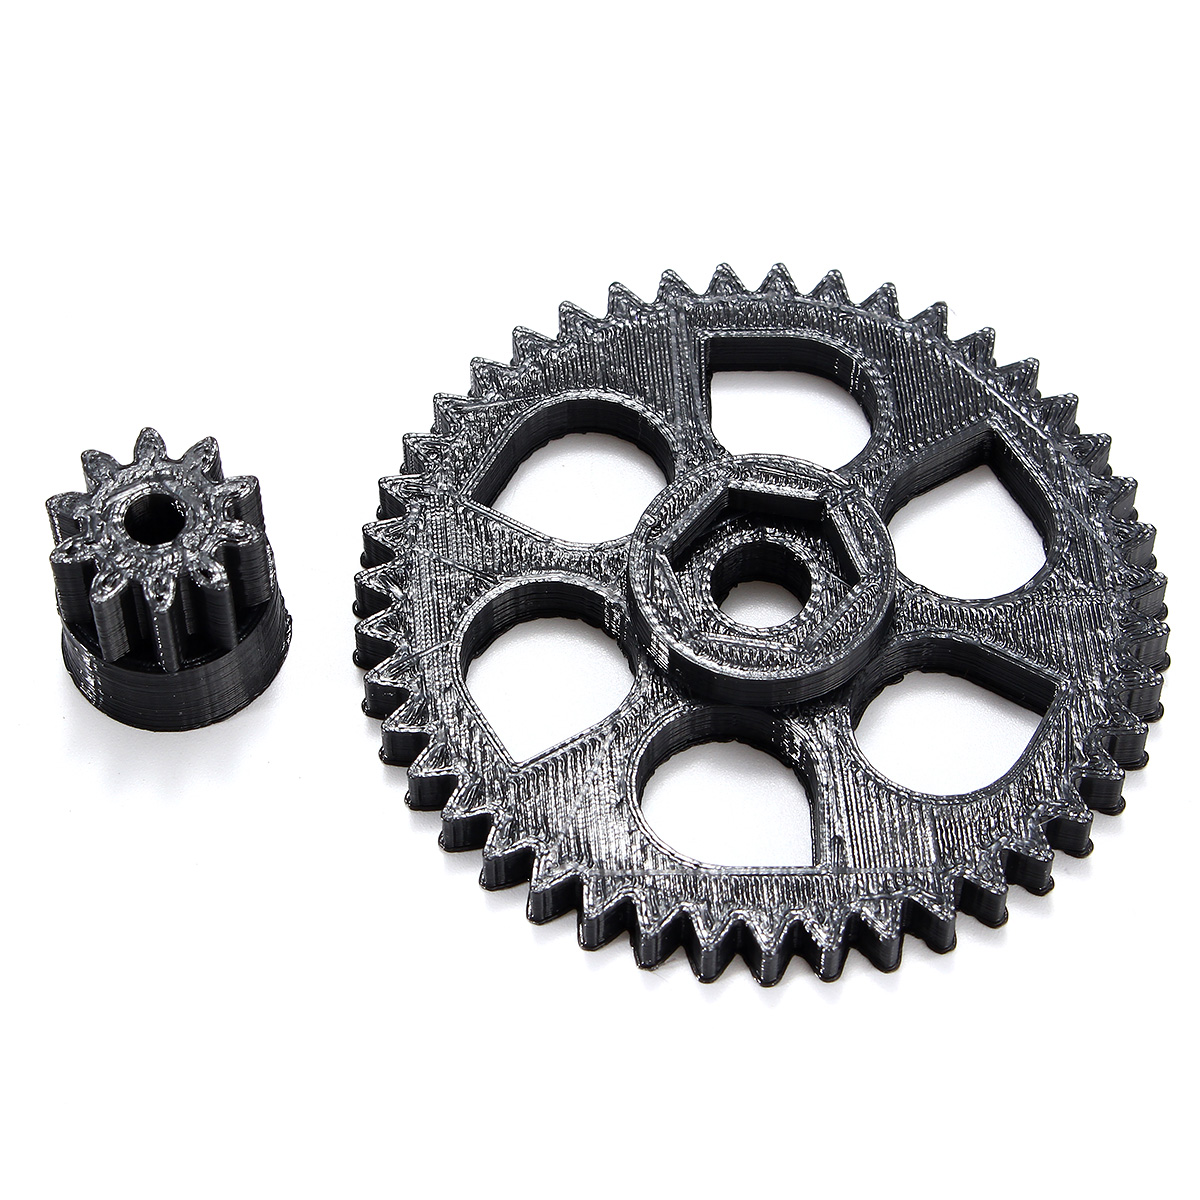 Black-ABS-Filament-Black-3D-Printed-Accessories-Parts-DIY-Kit-For-RepRap-Prusa-i3-3D-Printer-1187085-2